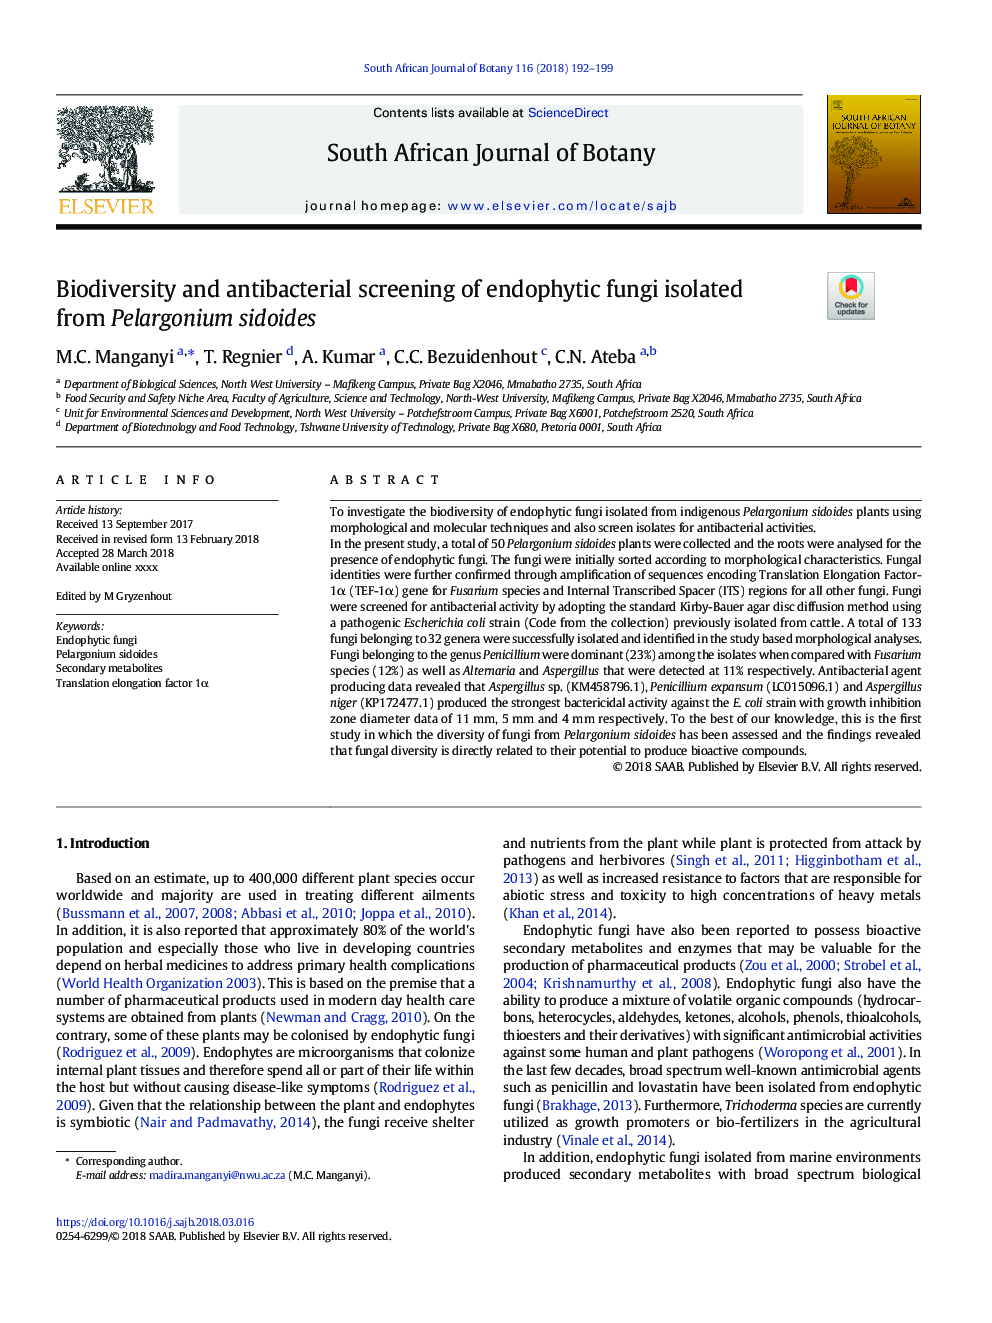 Biodiversity and antibacterial screening of endophytic fungi isolated from Pelargonium sidoides